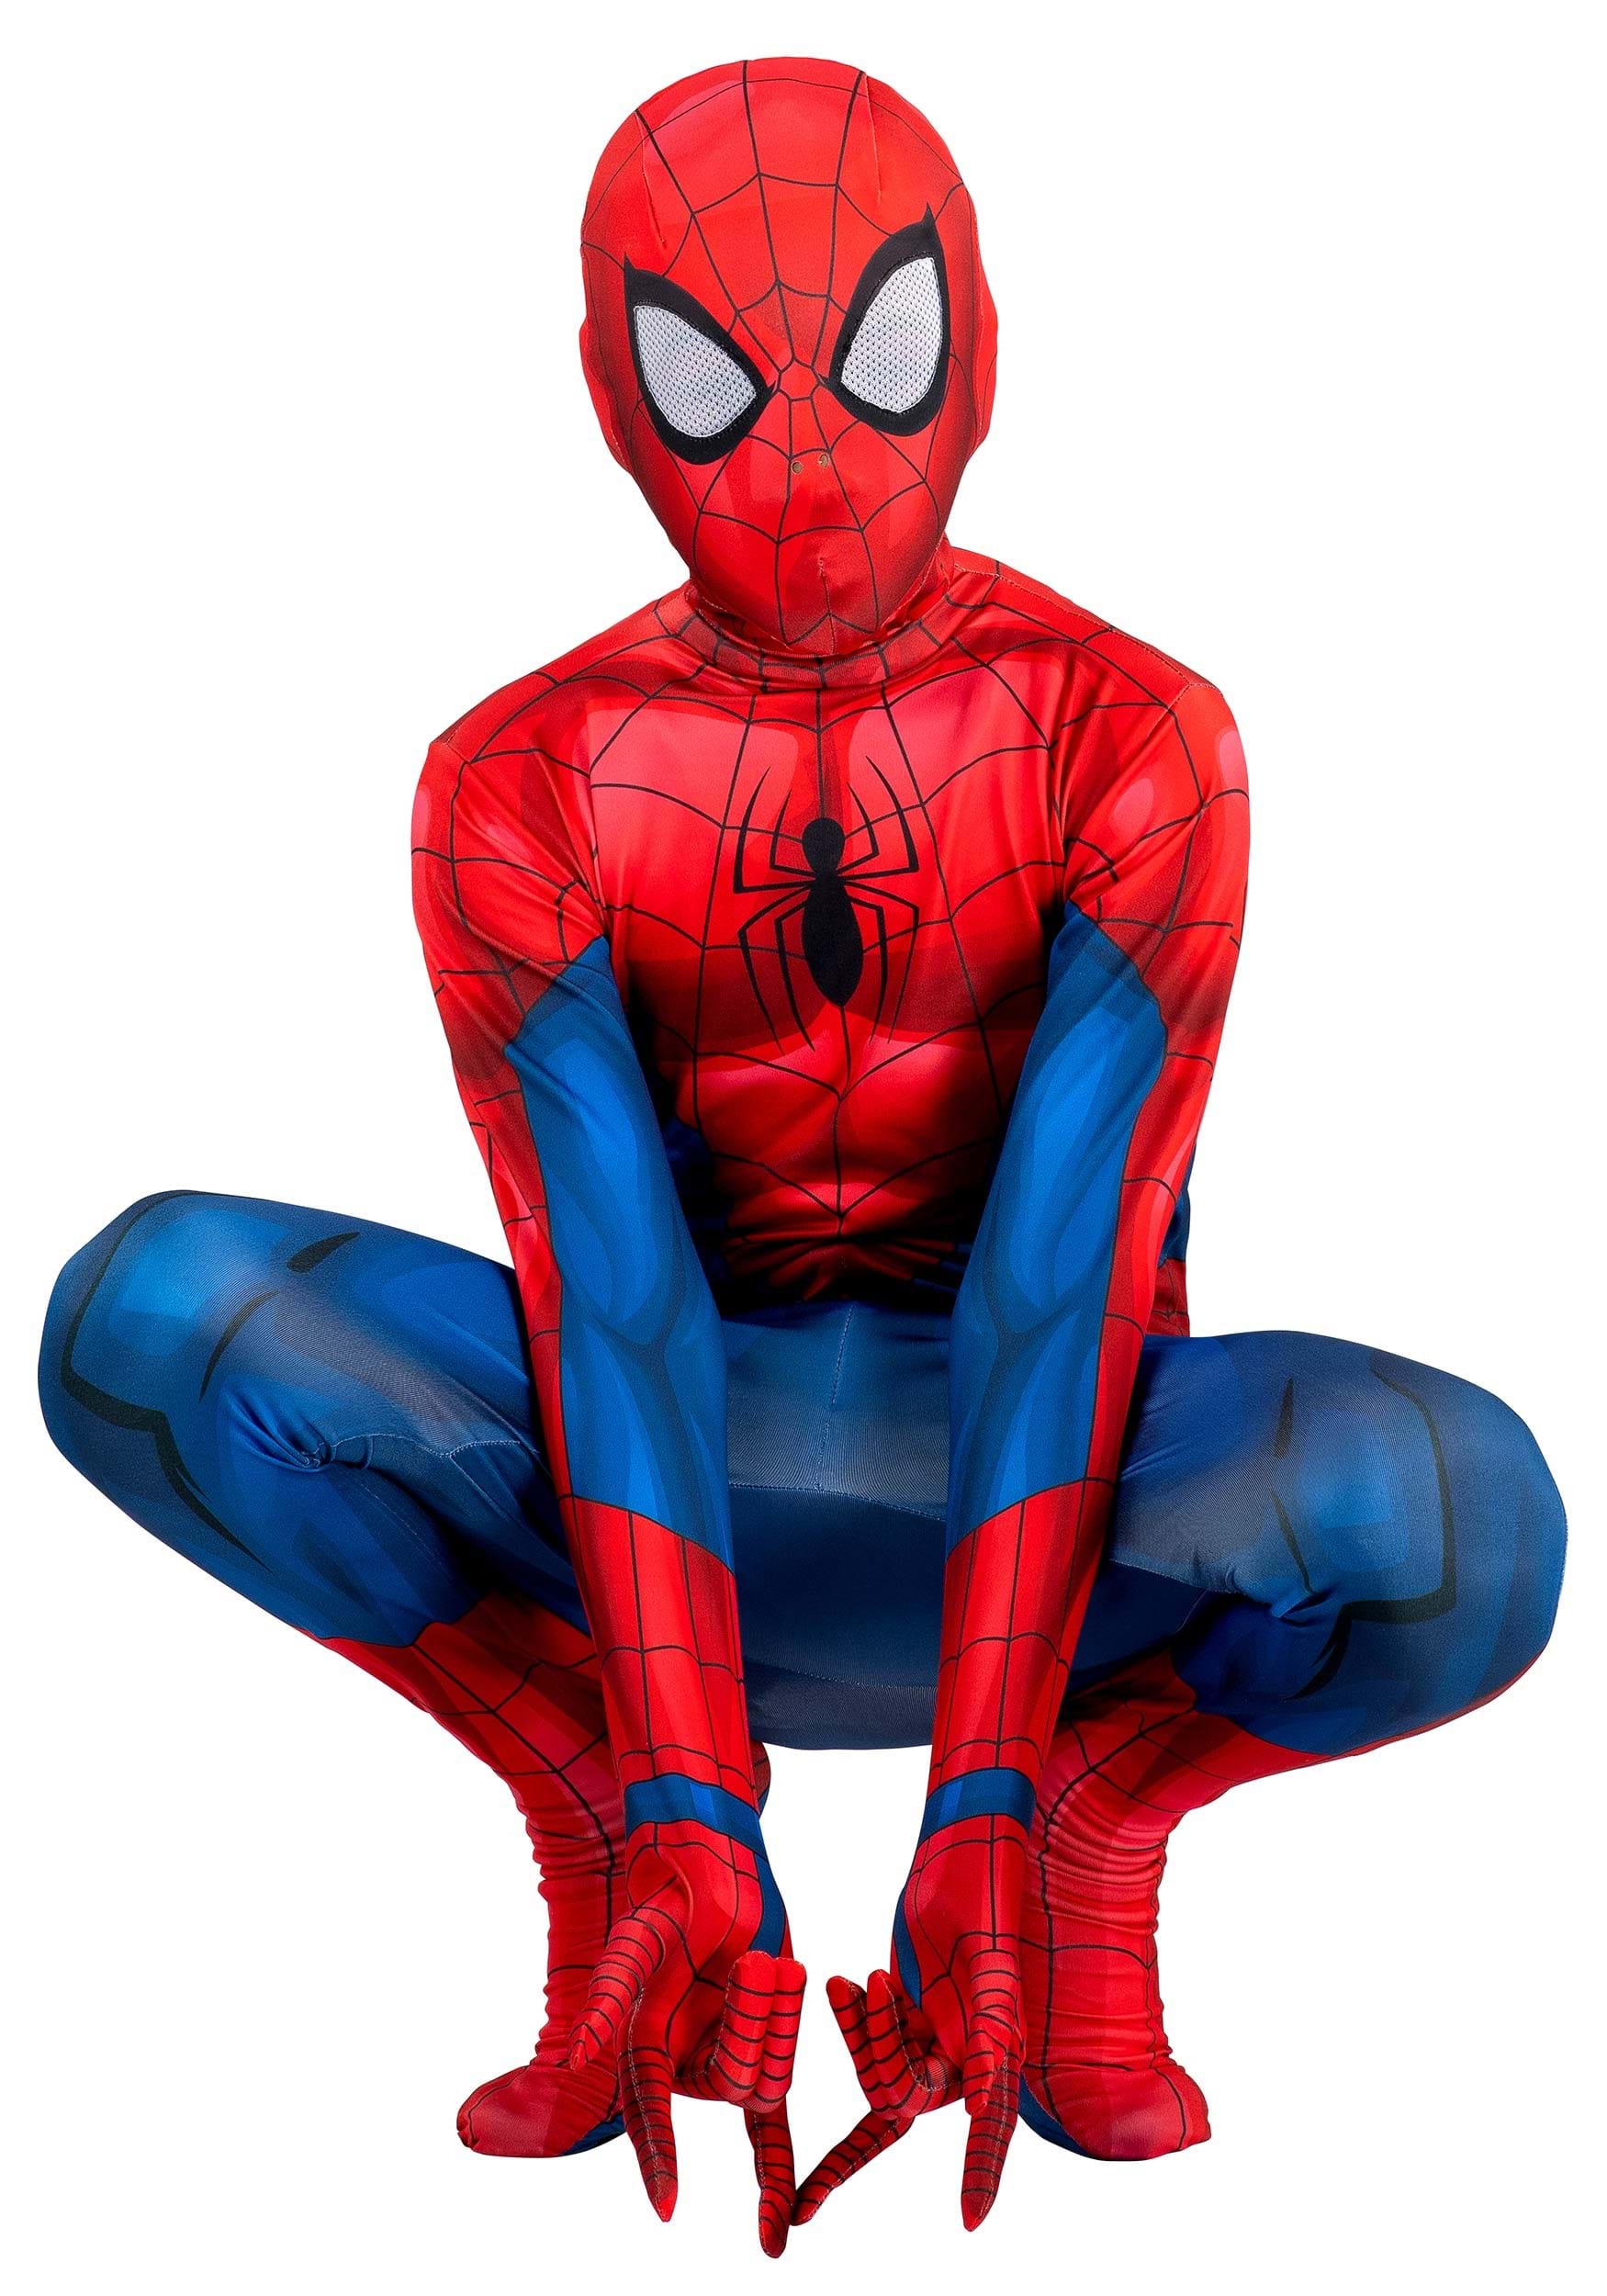 https://images.halloweencostumes.com/products/94224/2-1-296971/kids-classic-spiderman-zentai-costume-alt-1.jpg